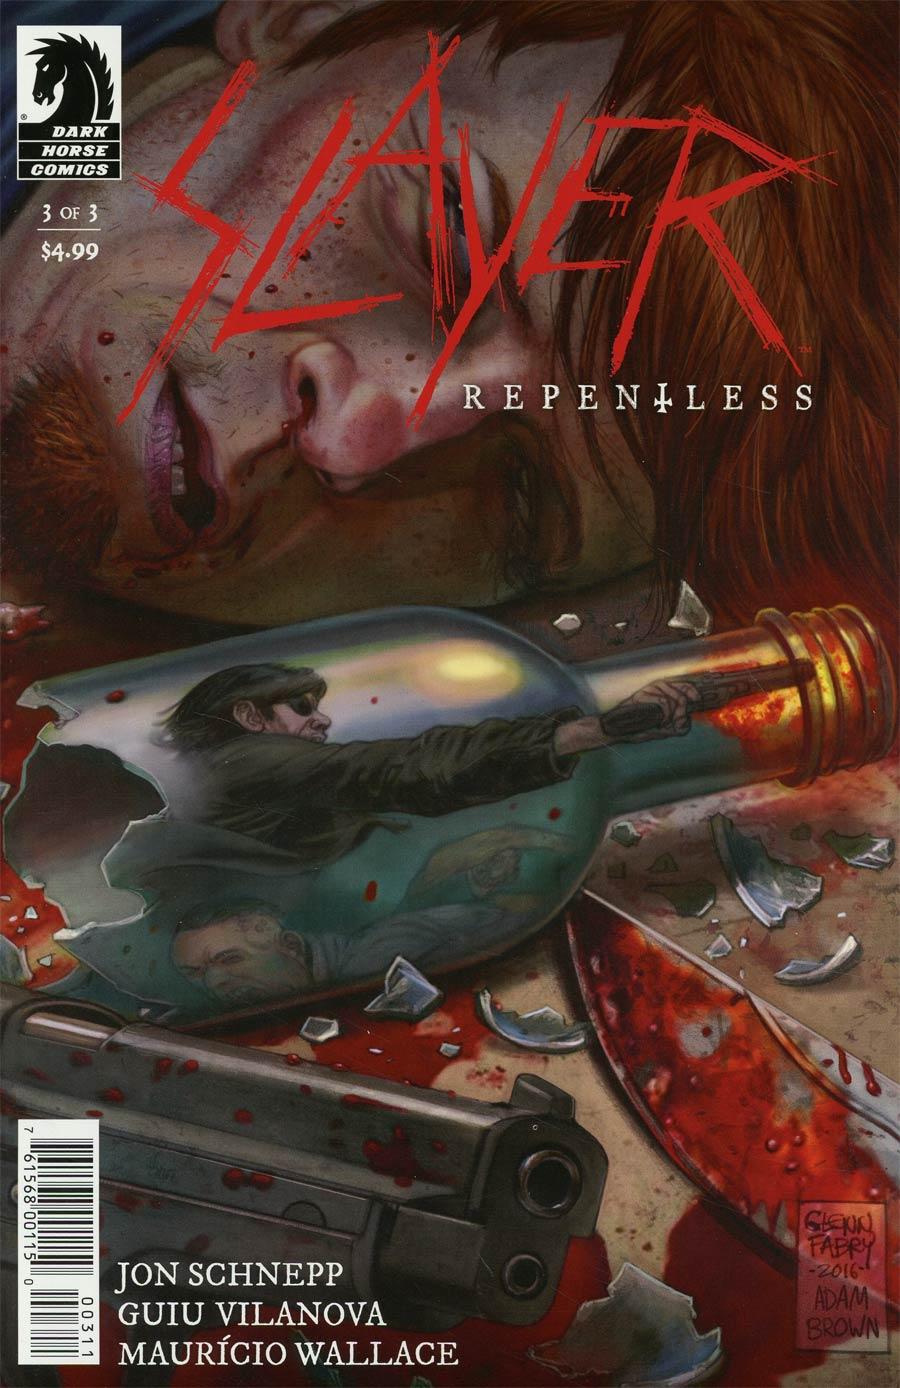 Slayer Repentless Vol. 1 #3